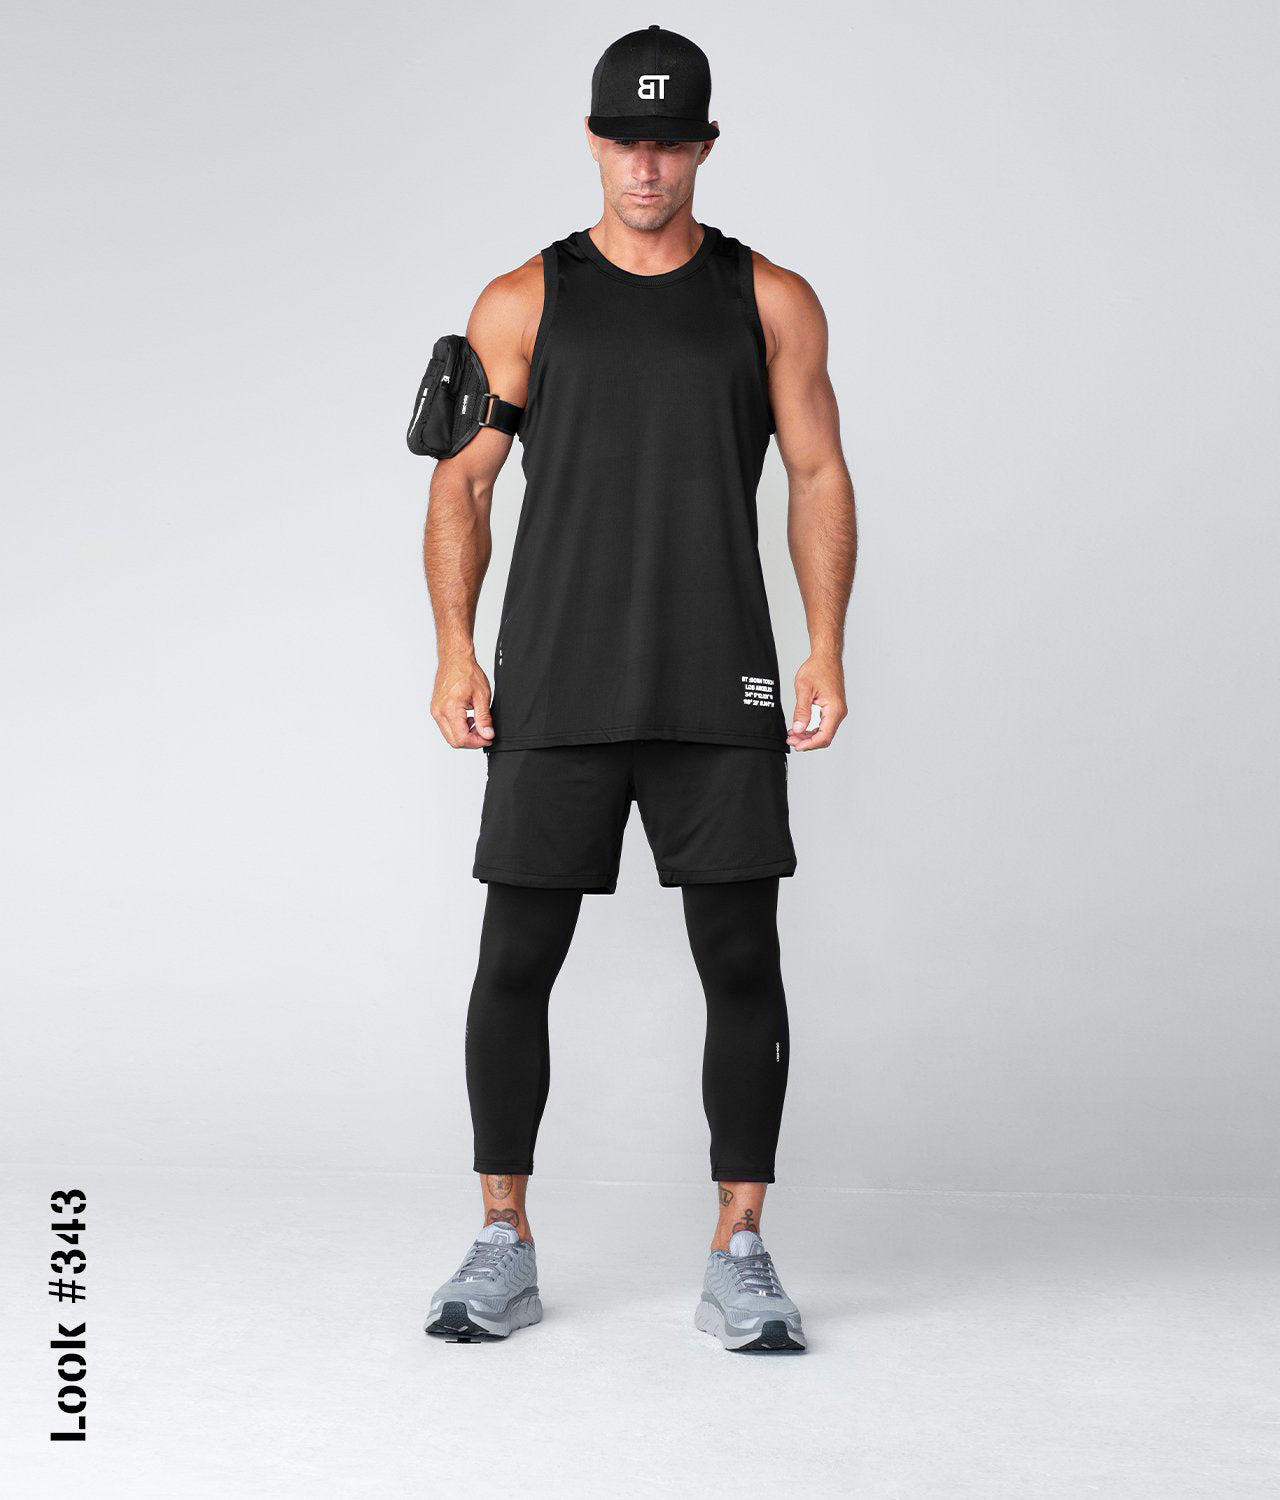 born tough air pro mens black gym workout shorts with legging liner 4 f12f1507 d776 4d73 9bd7 f3dbe6f84169